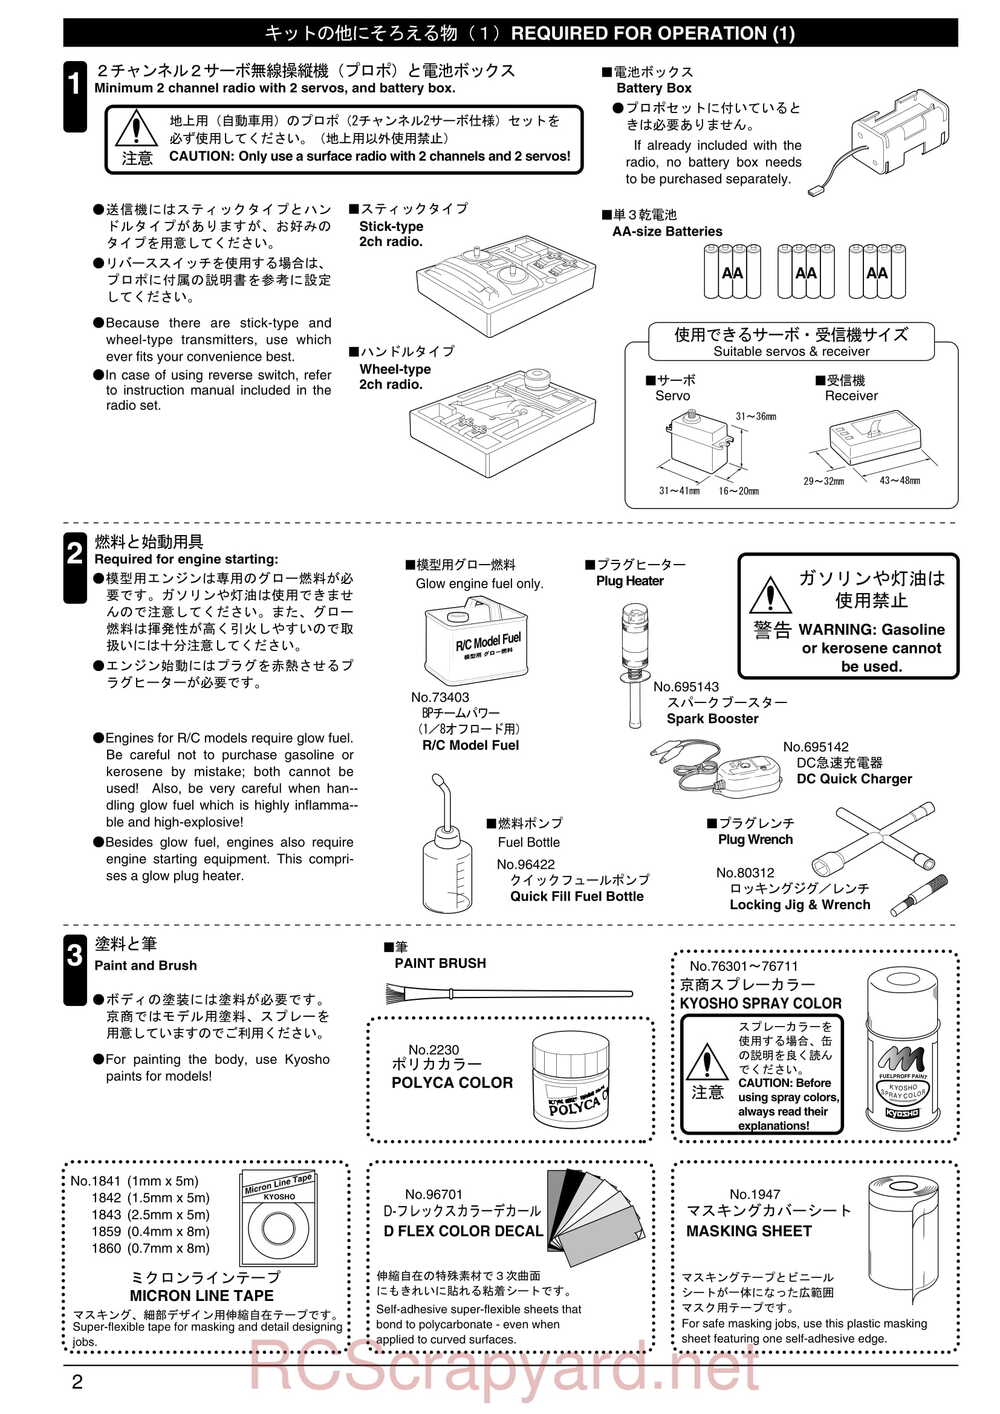 Kyosho - 31192 - Inferno-MP-7-5 Sports - Manual - Page 02